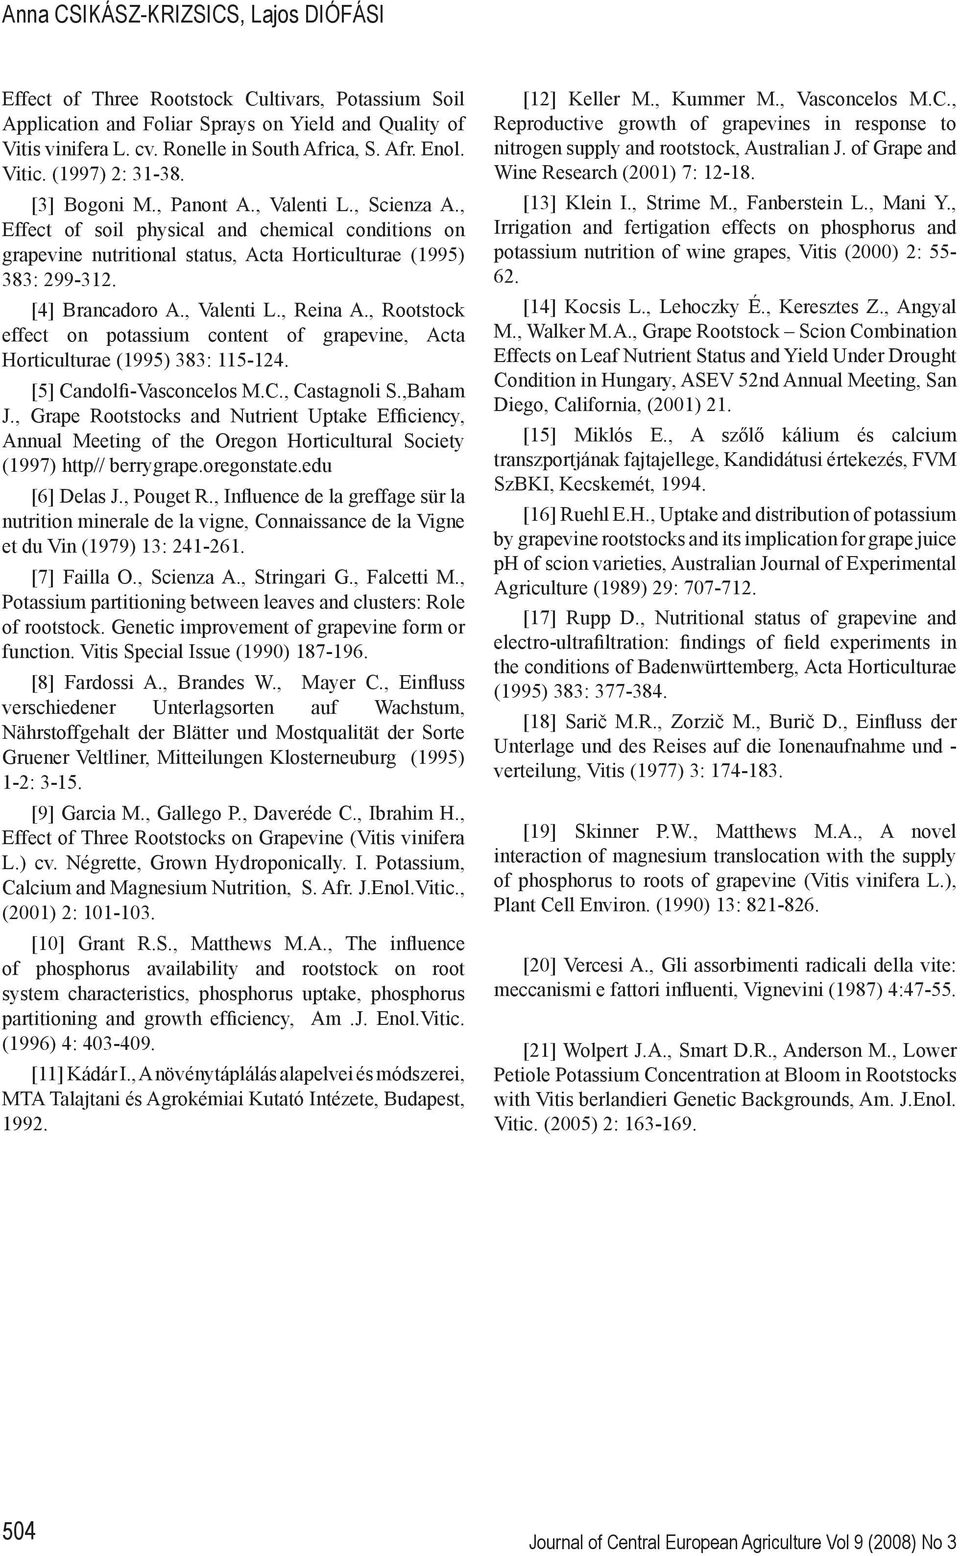 [4] Brancadoro A., Valenti L., Reina A., Rootstock effect on potassium content of grapevine, Acta Horticulturae (1995) 383: 115-124. [5] Candolfi-Vasconcelos M.C., Castagnoli S.,Baham J.